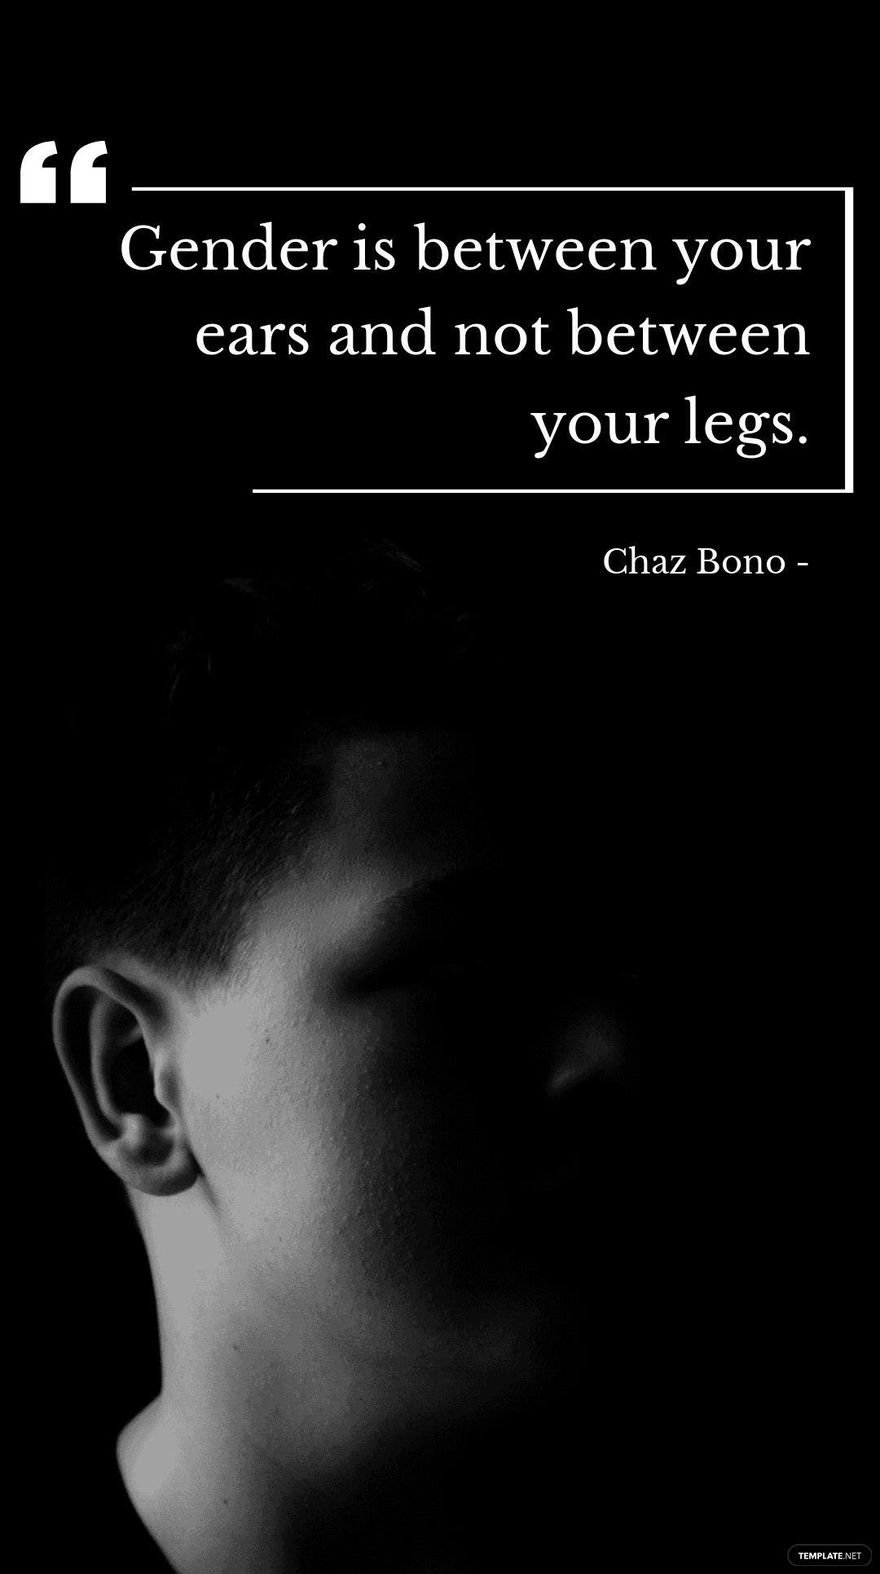 Chaz Bono - Gender is between your ears and not between your legs.